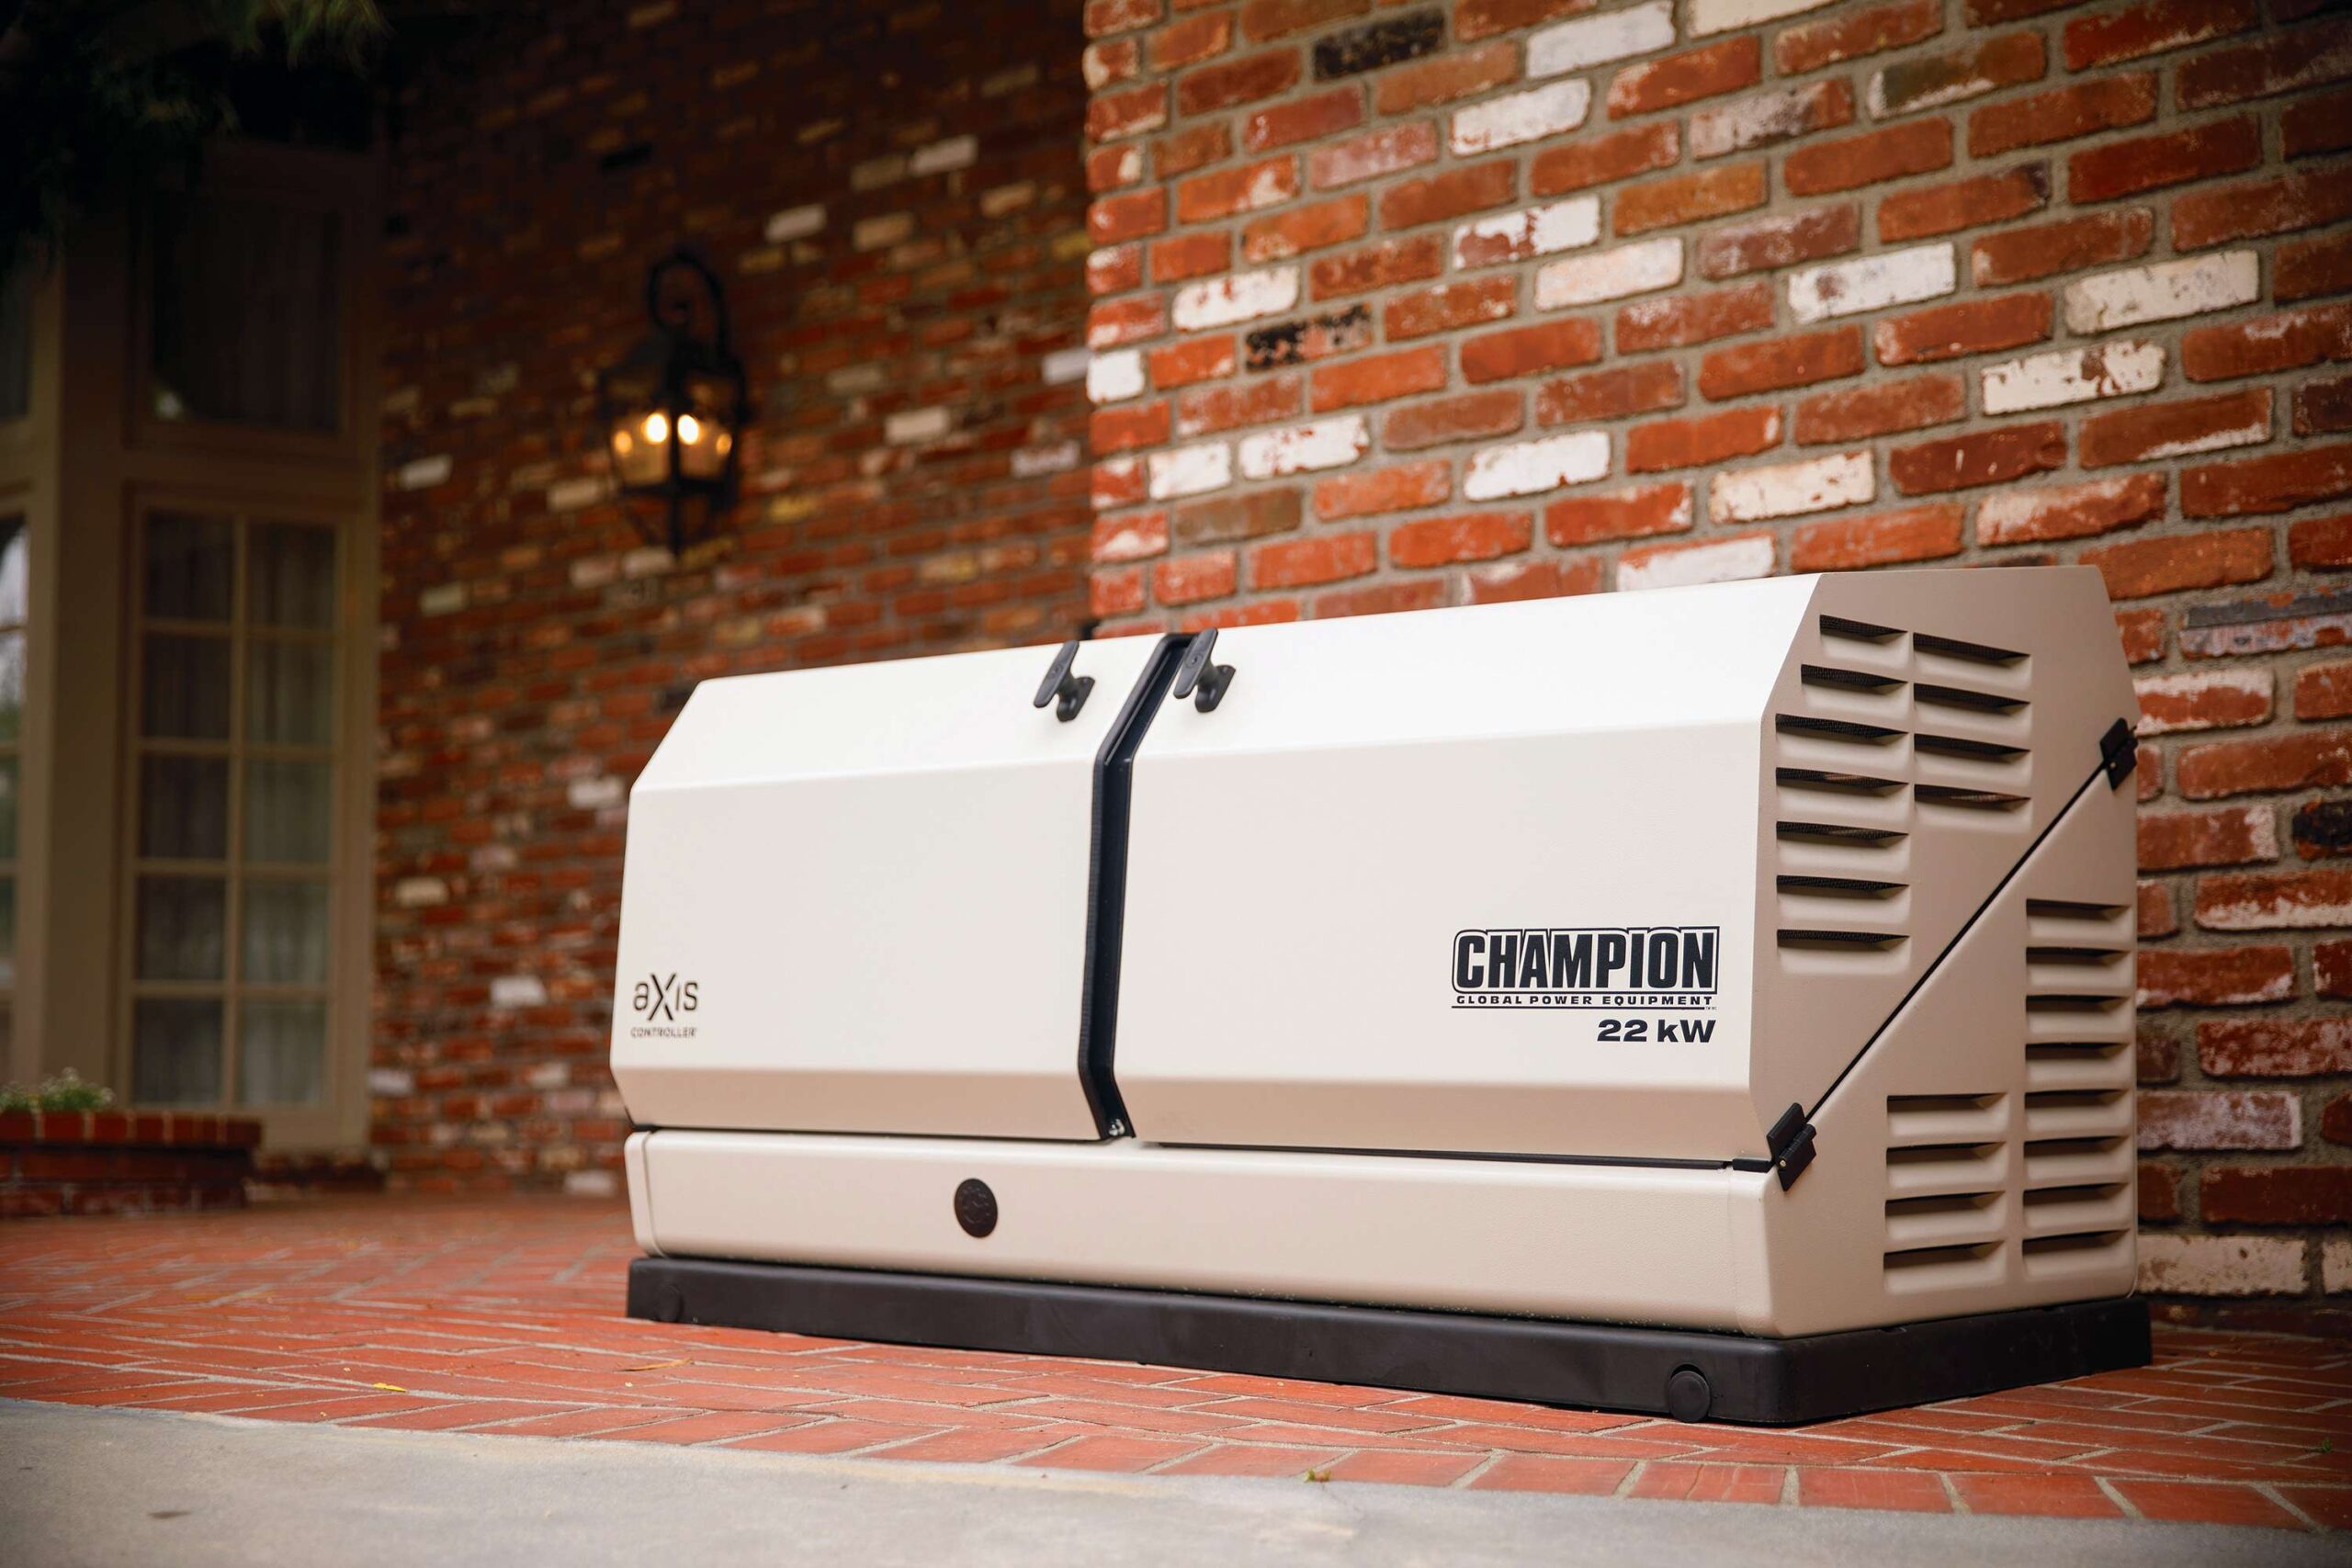 Champion 22kW Generator Near a Home's Brick Wall on a Brick Patio